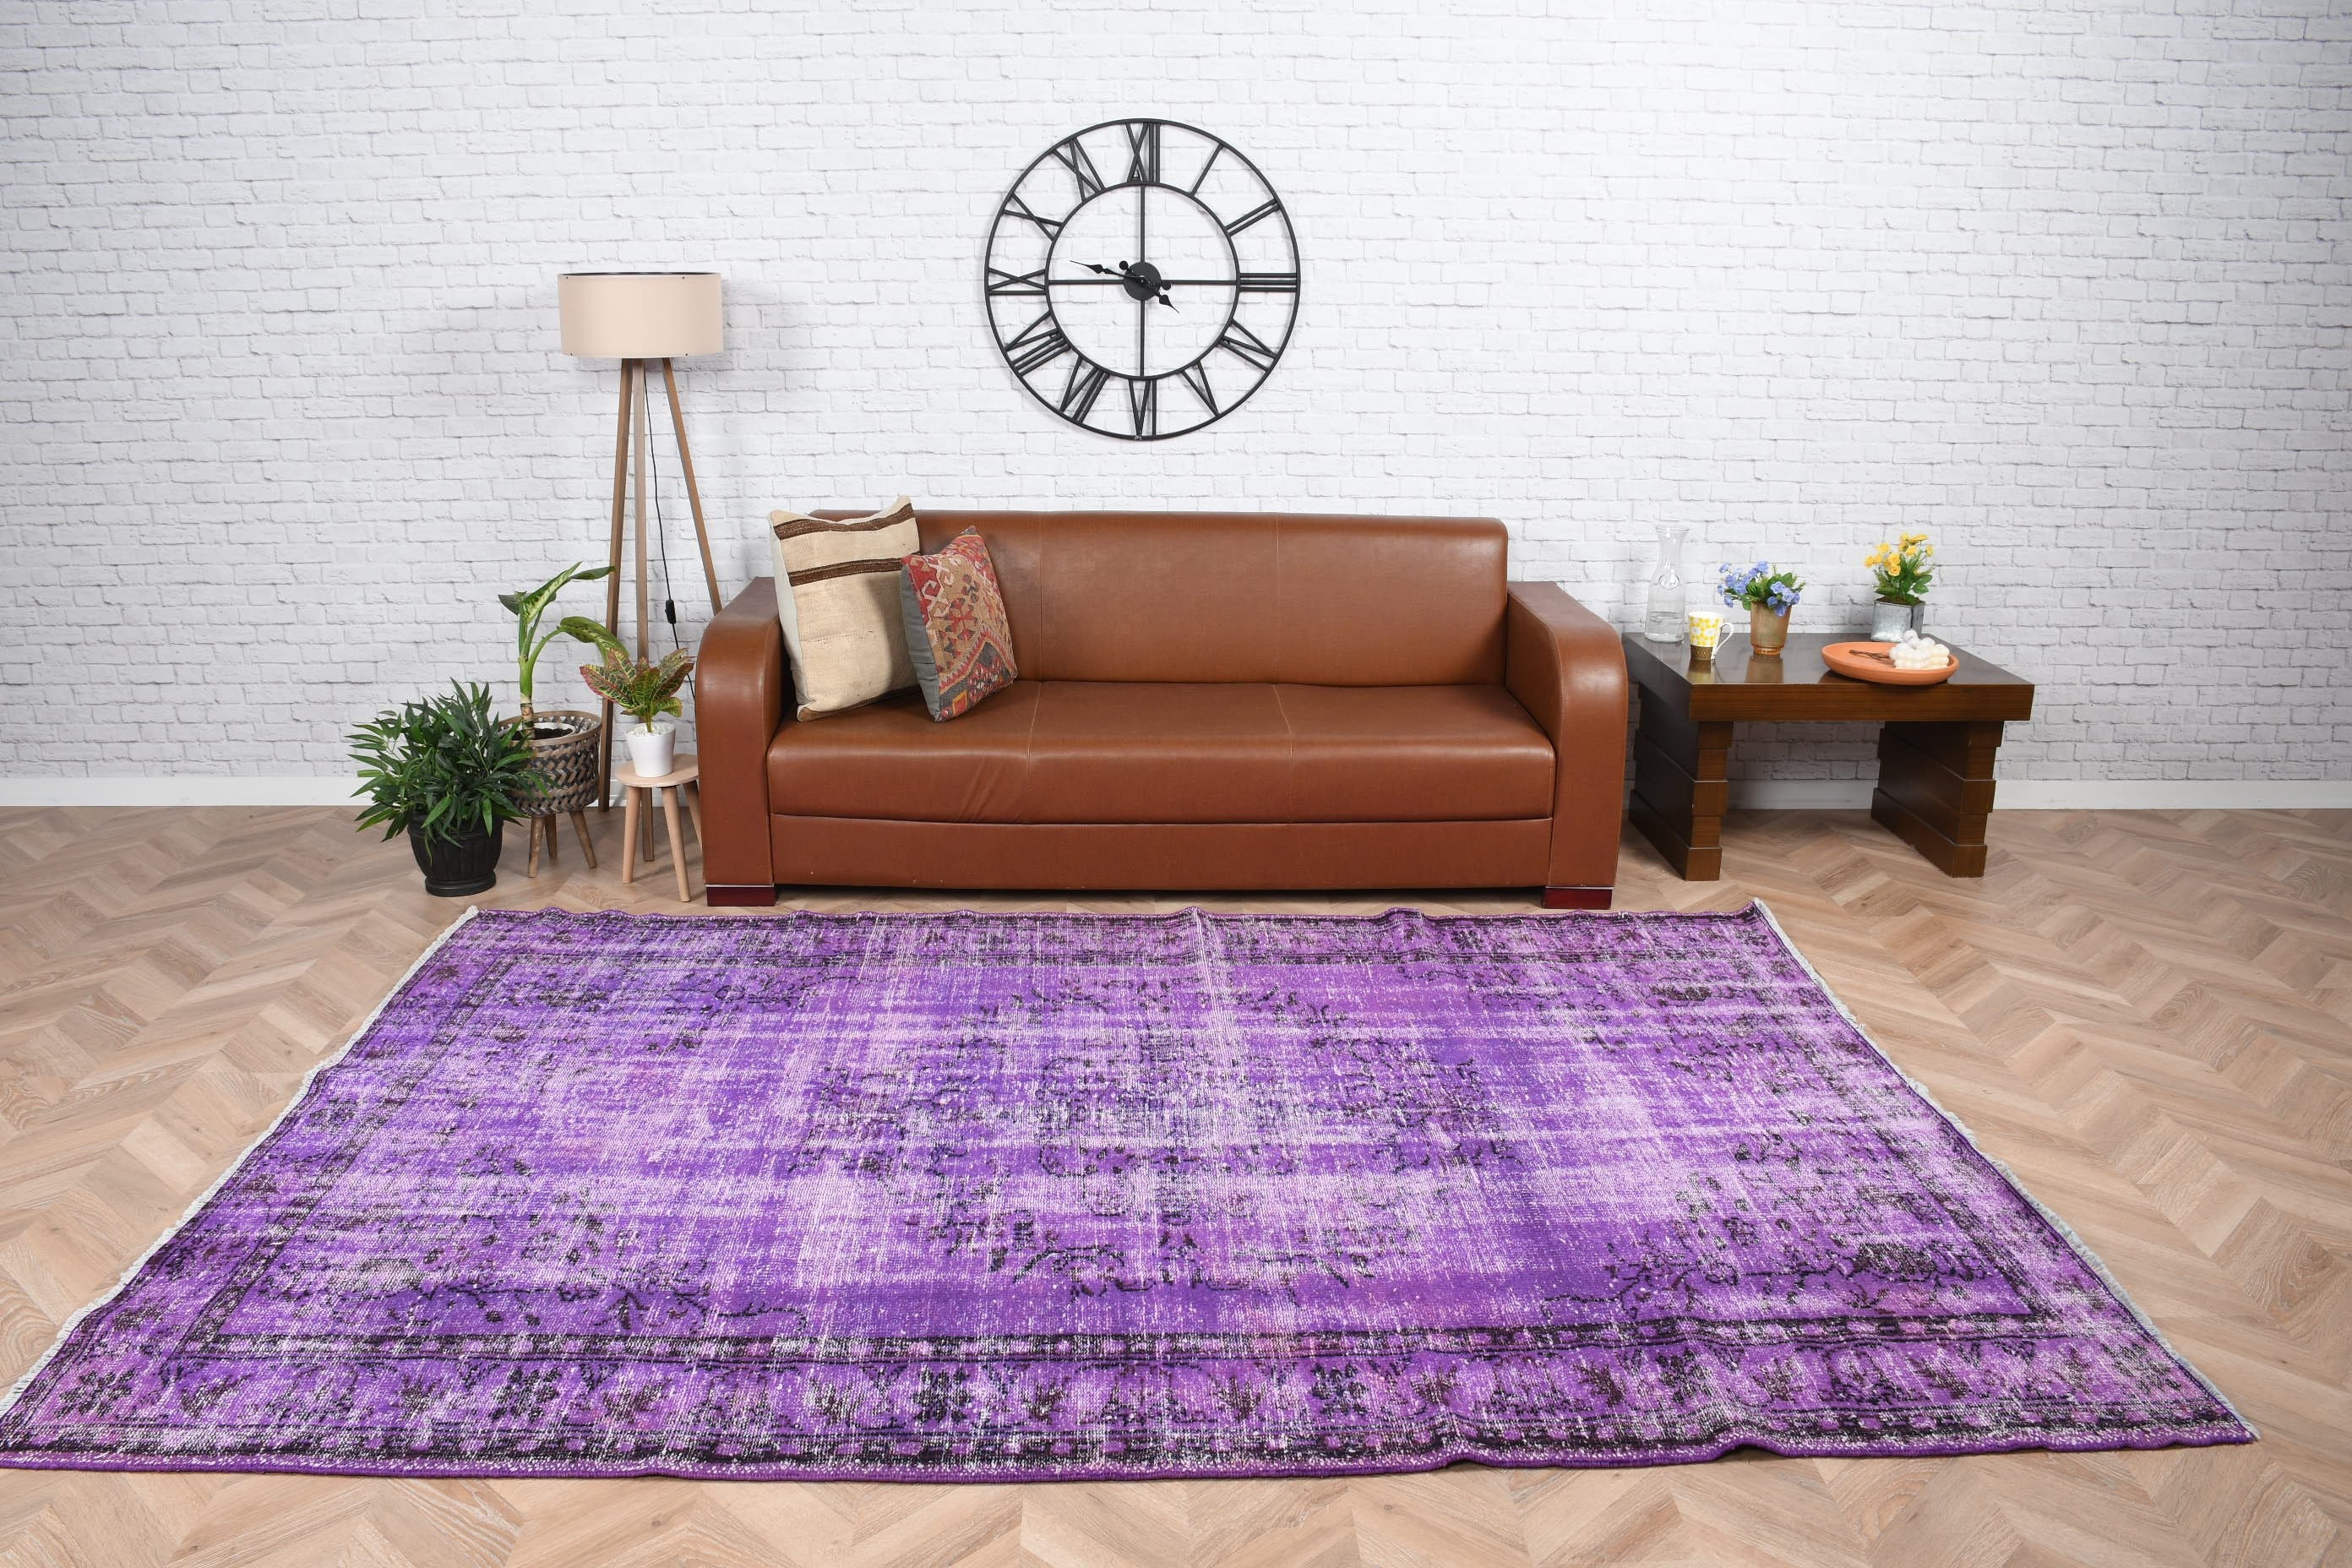 Salon Rug, 6.2x9.2 ft Large Rug, Vintage Rug, Tribal Rugs, Purple Anatolian Rug, Bedroom Rug, Turkish Rugs, Living Room Rug, Home Decor Rug